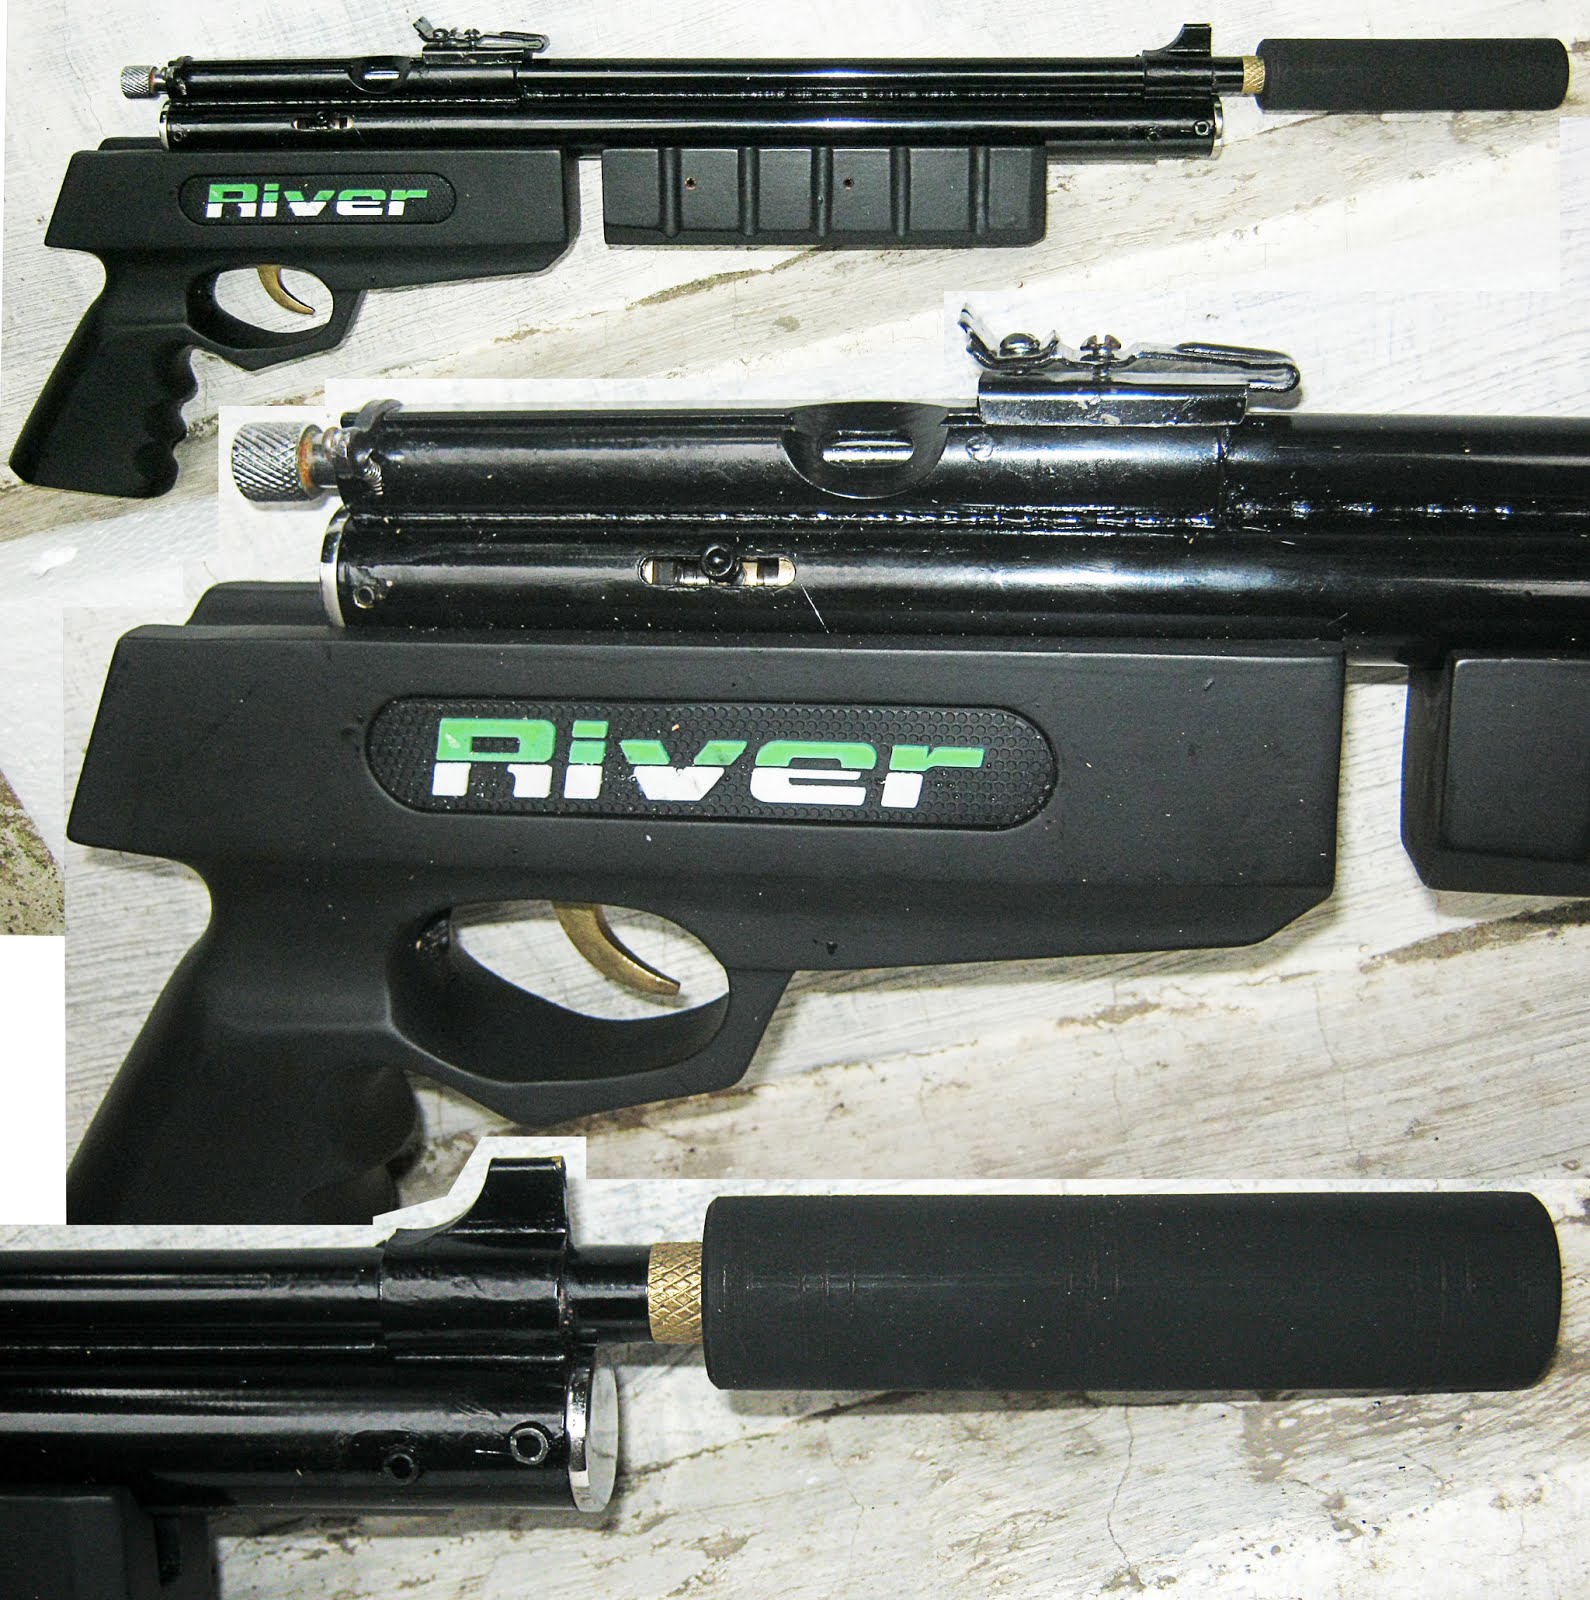 Sharp River Pistol Mini